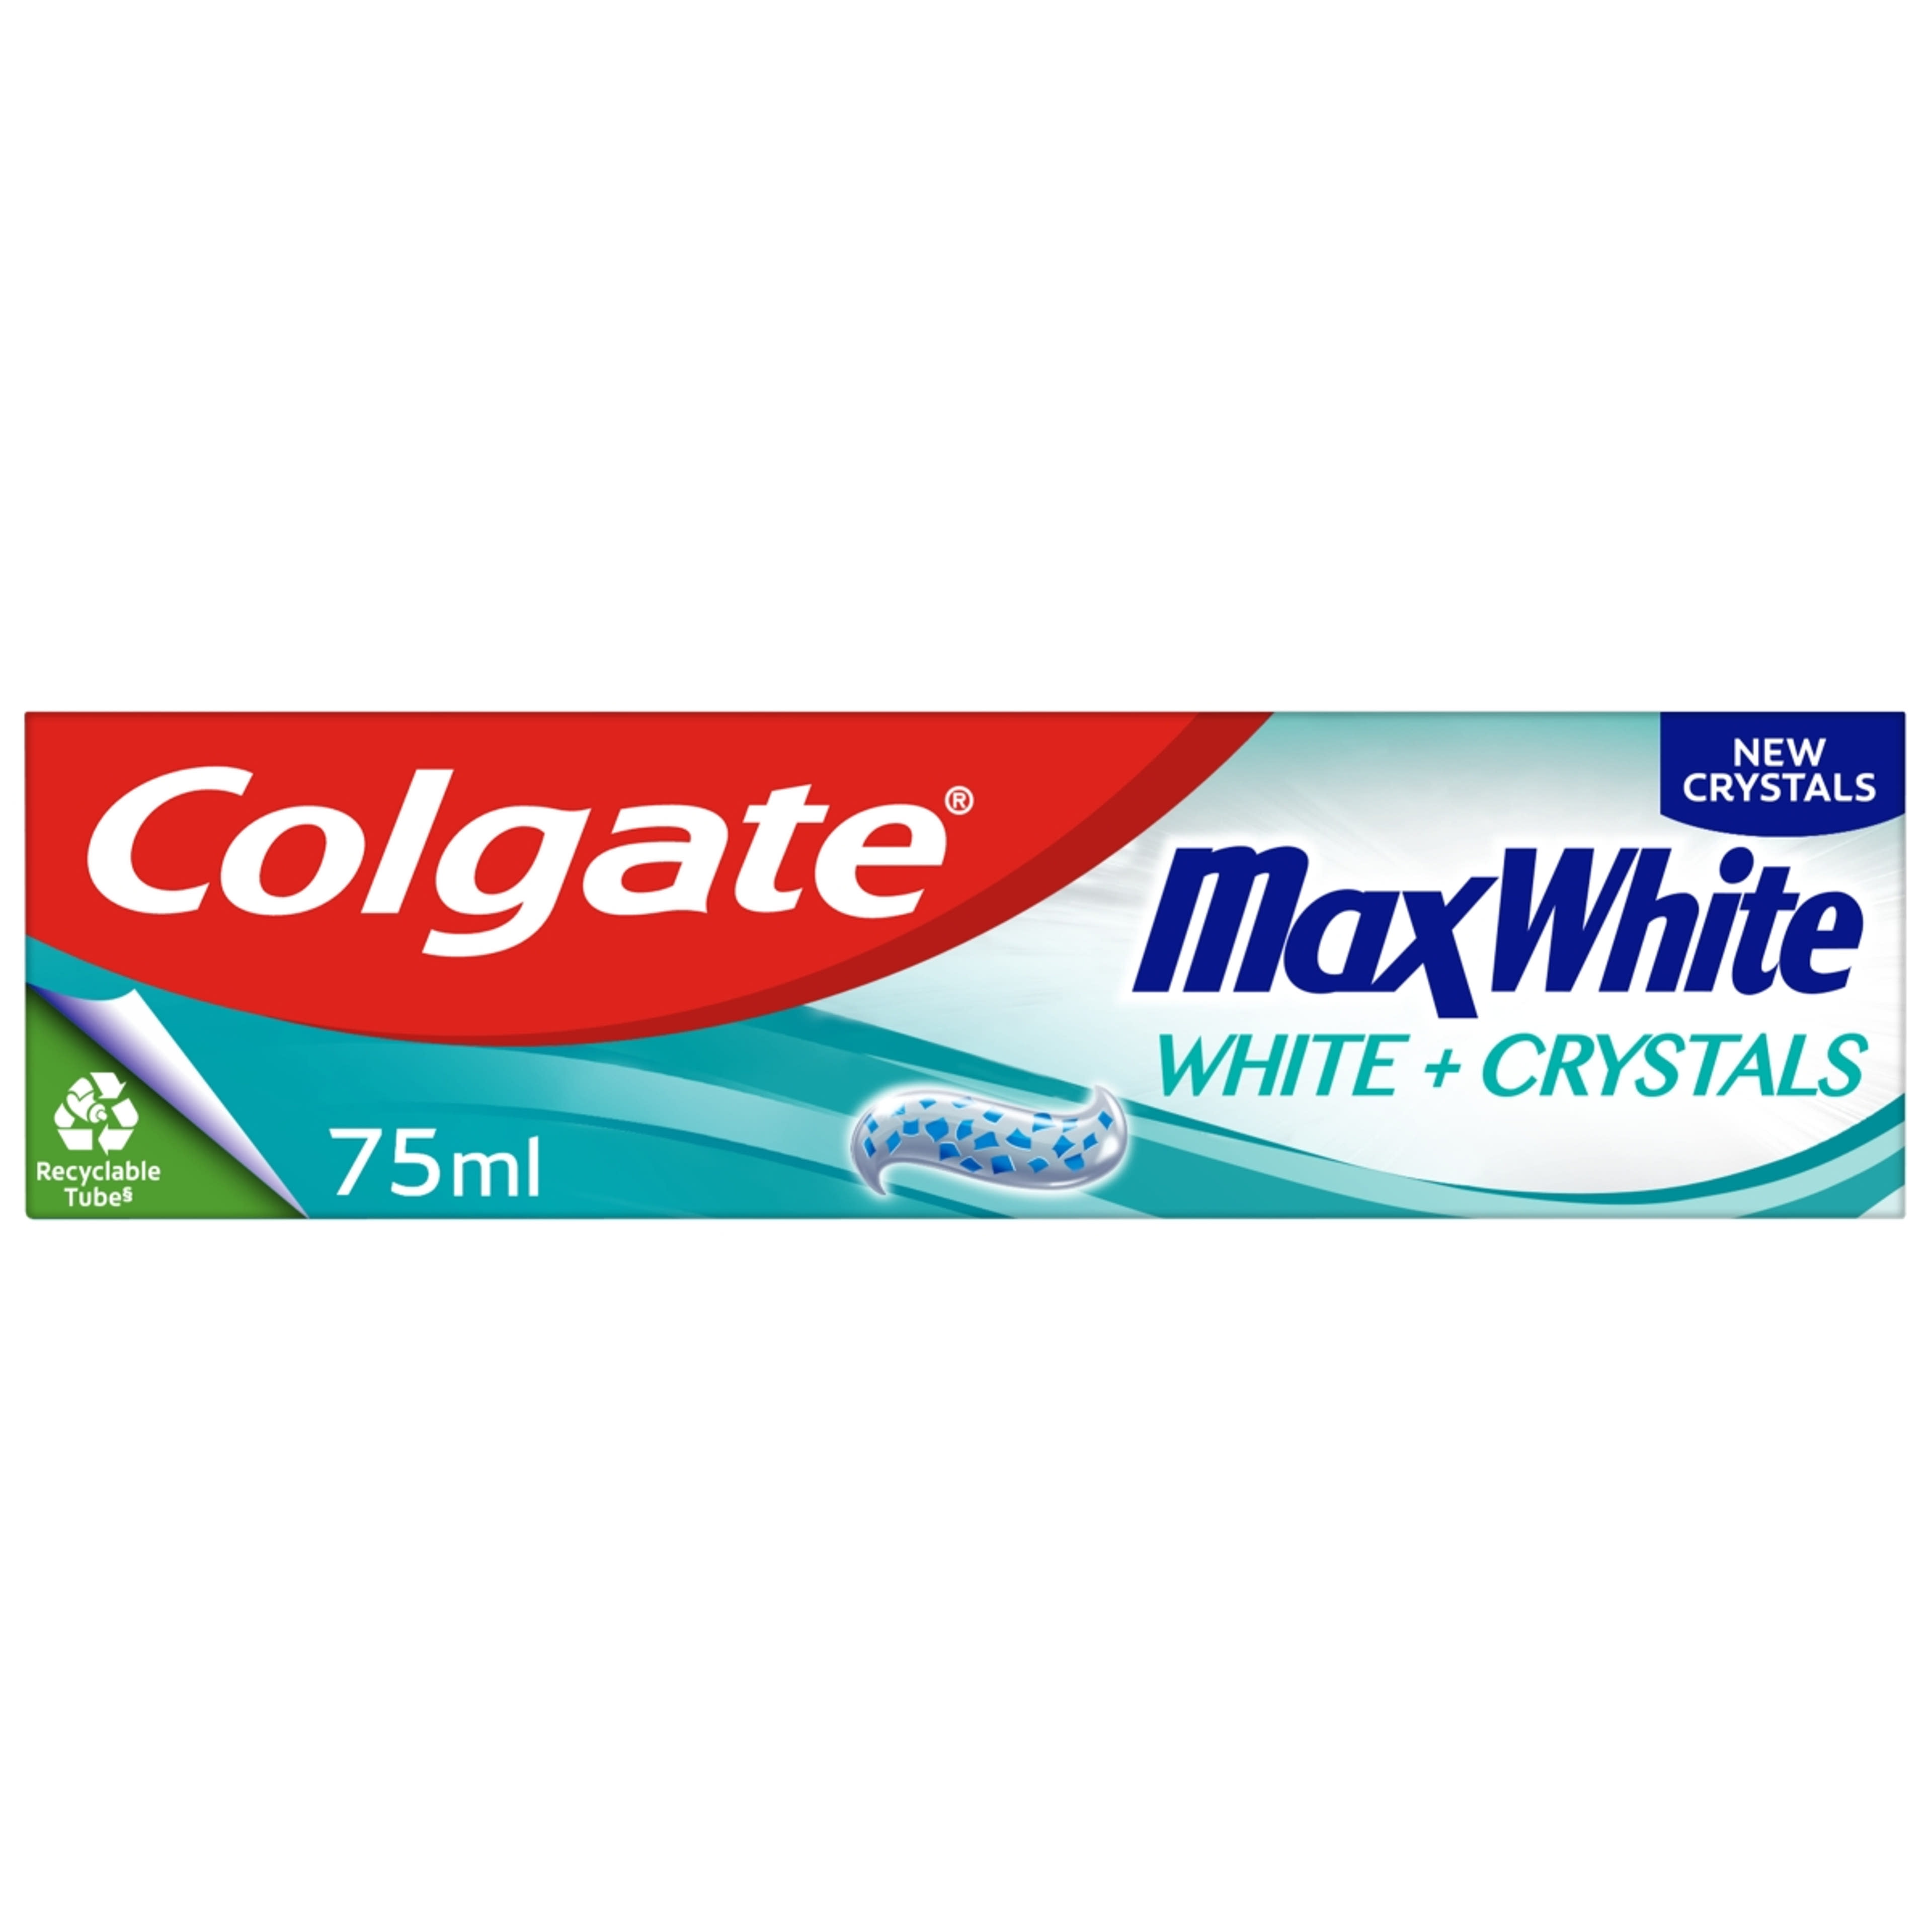 Colgate Max White White Crystals fogfehérítő fogkrém - 75 ml-9